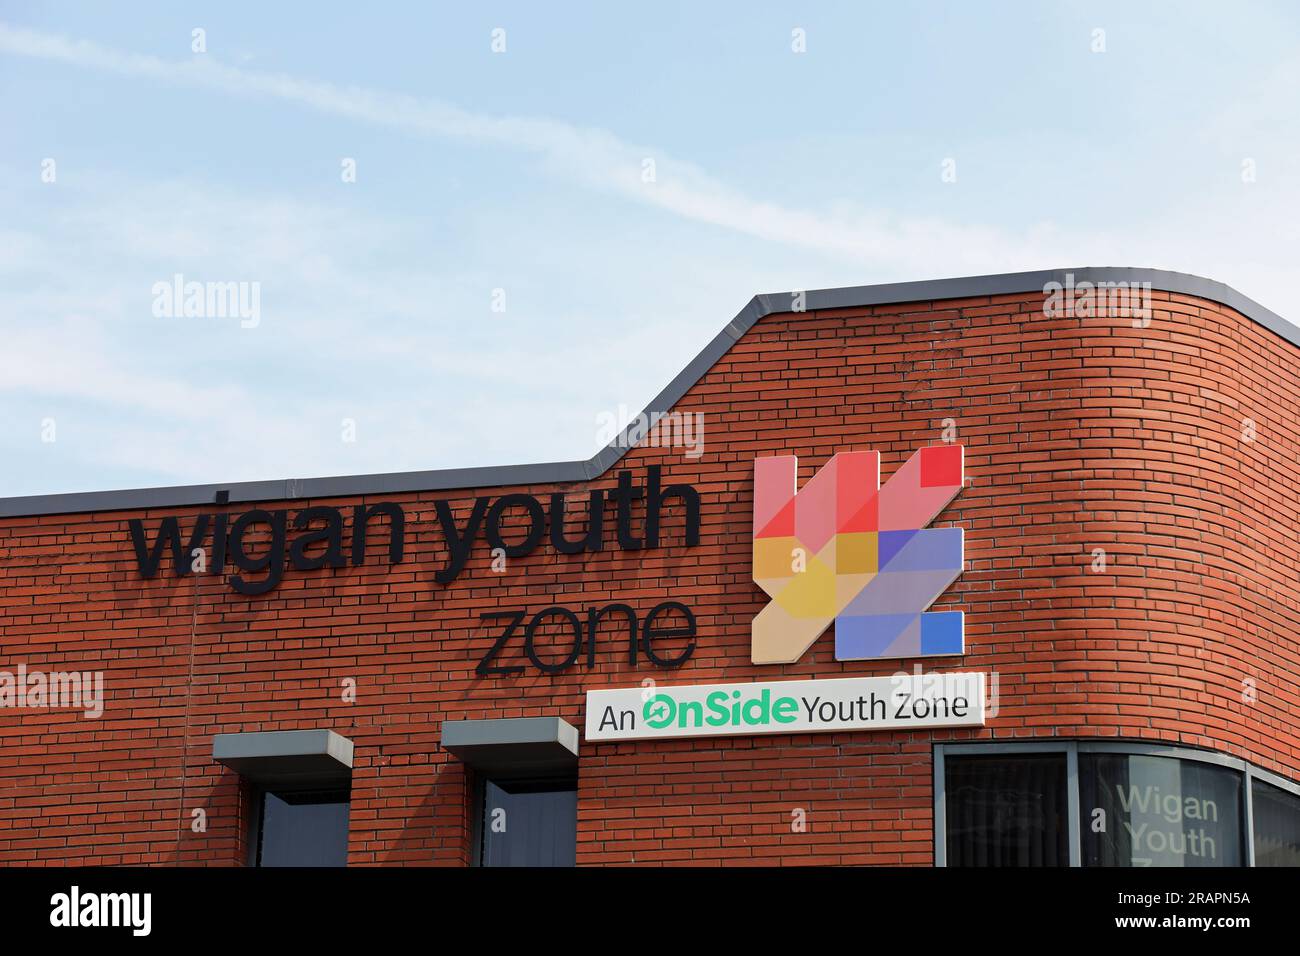 Wigan Youth Zone Stock Photo